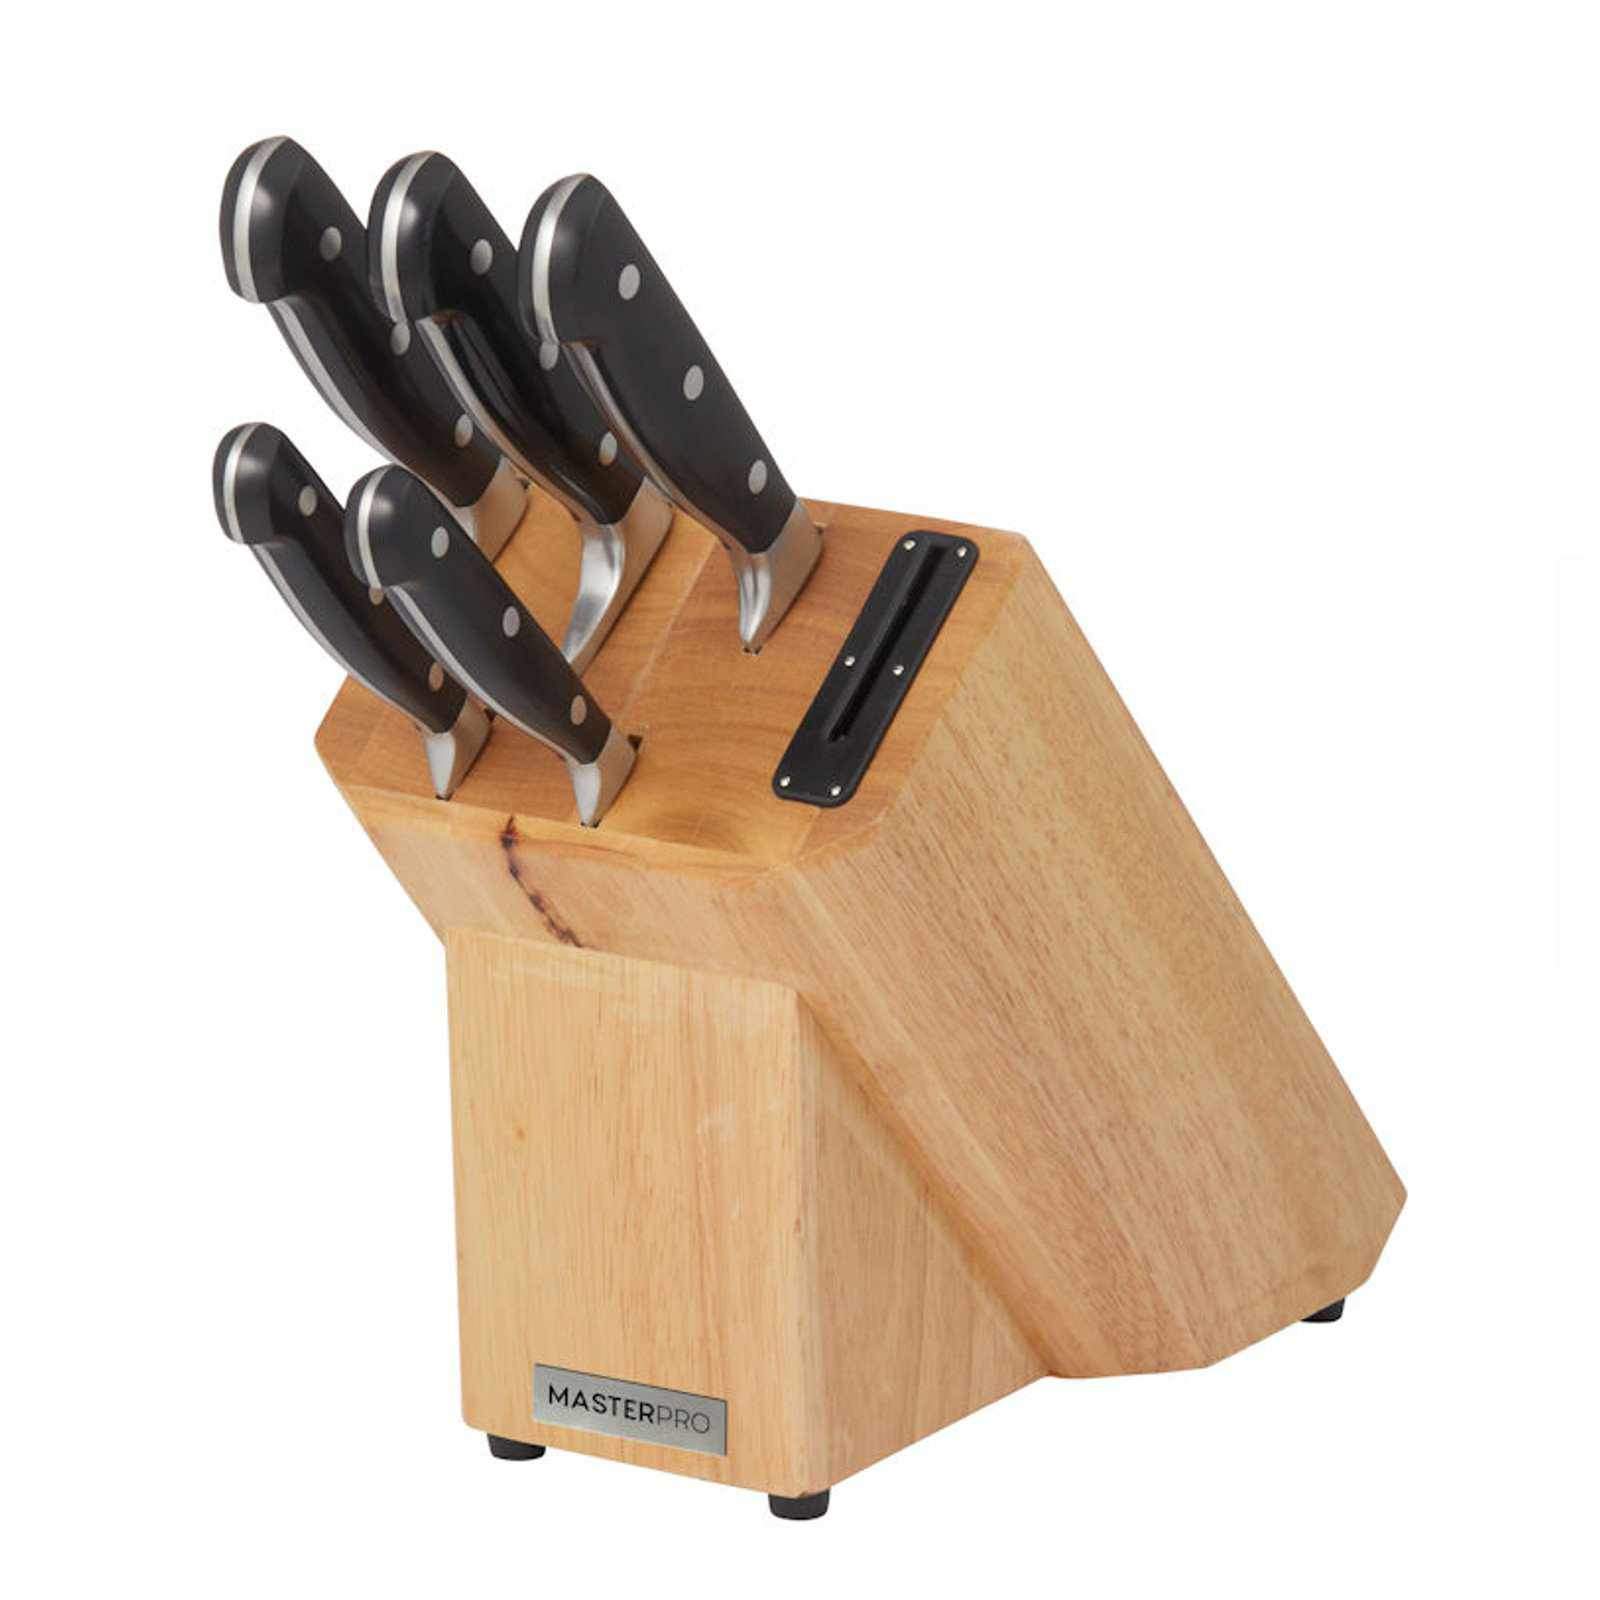 MasterPro Knife Block Set - Professional 6 Pcs Knives Set-knife-Chef's Quality Cookware